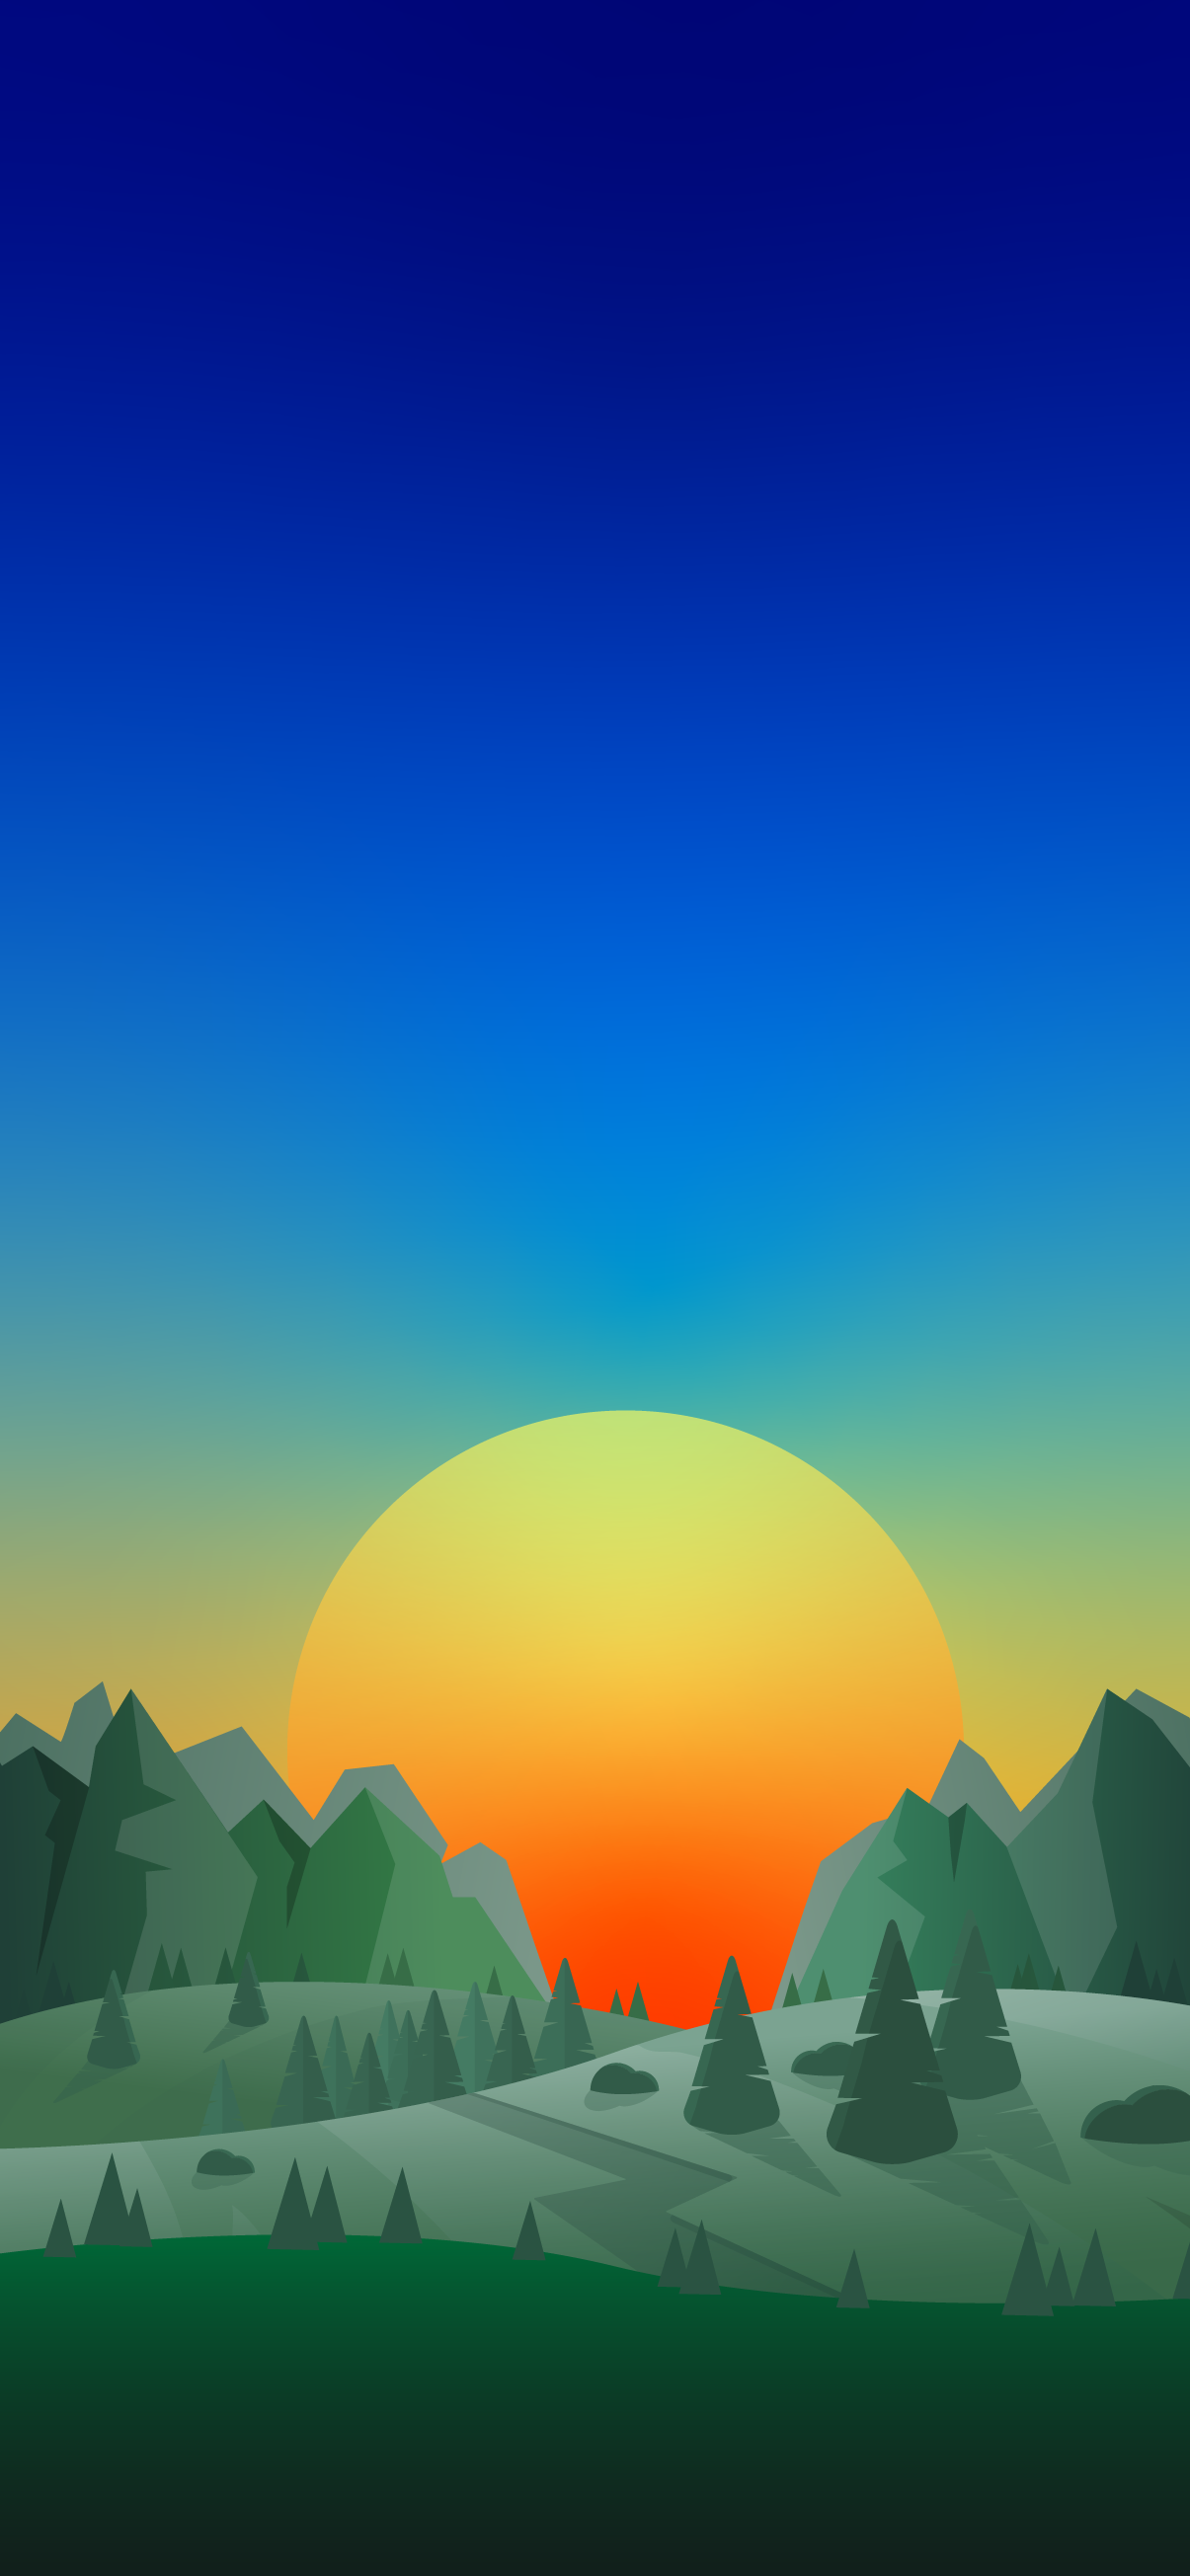 Cool iphone wallpaper - Landscape sun day